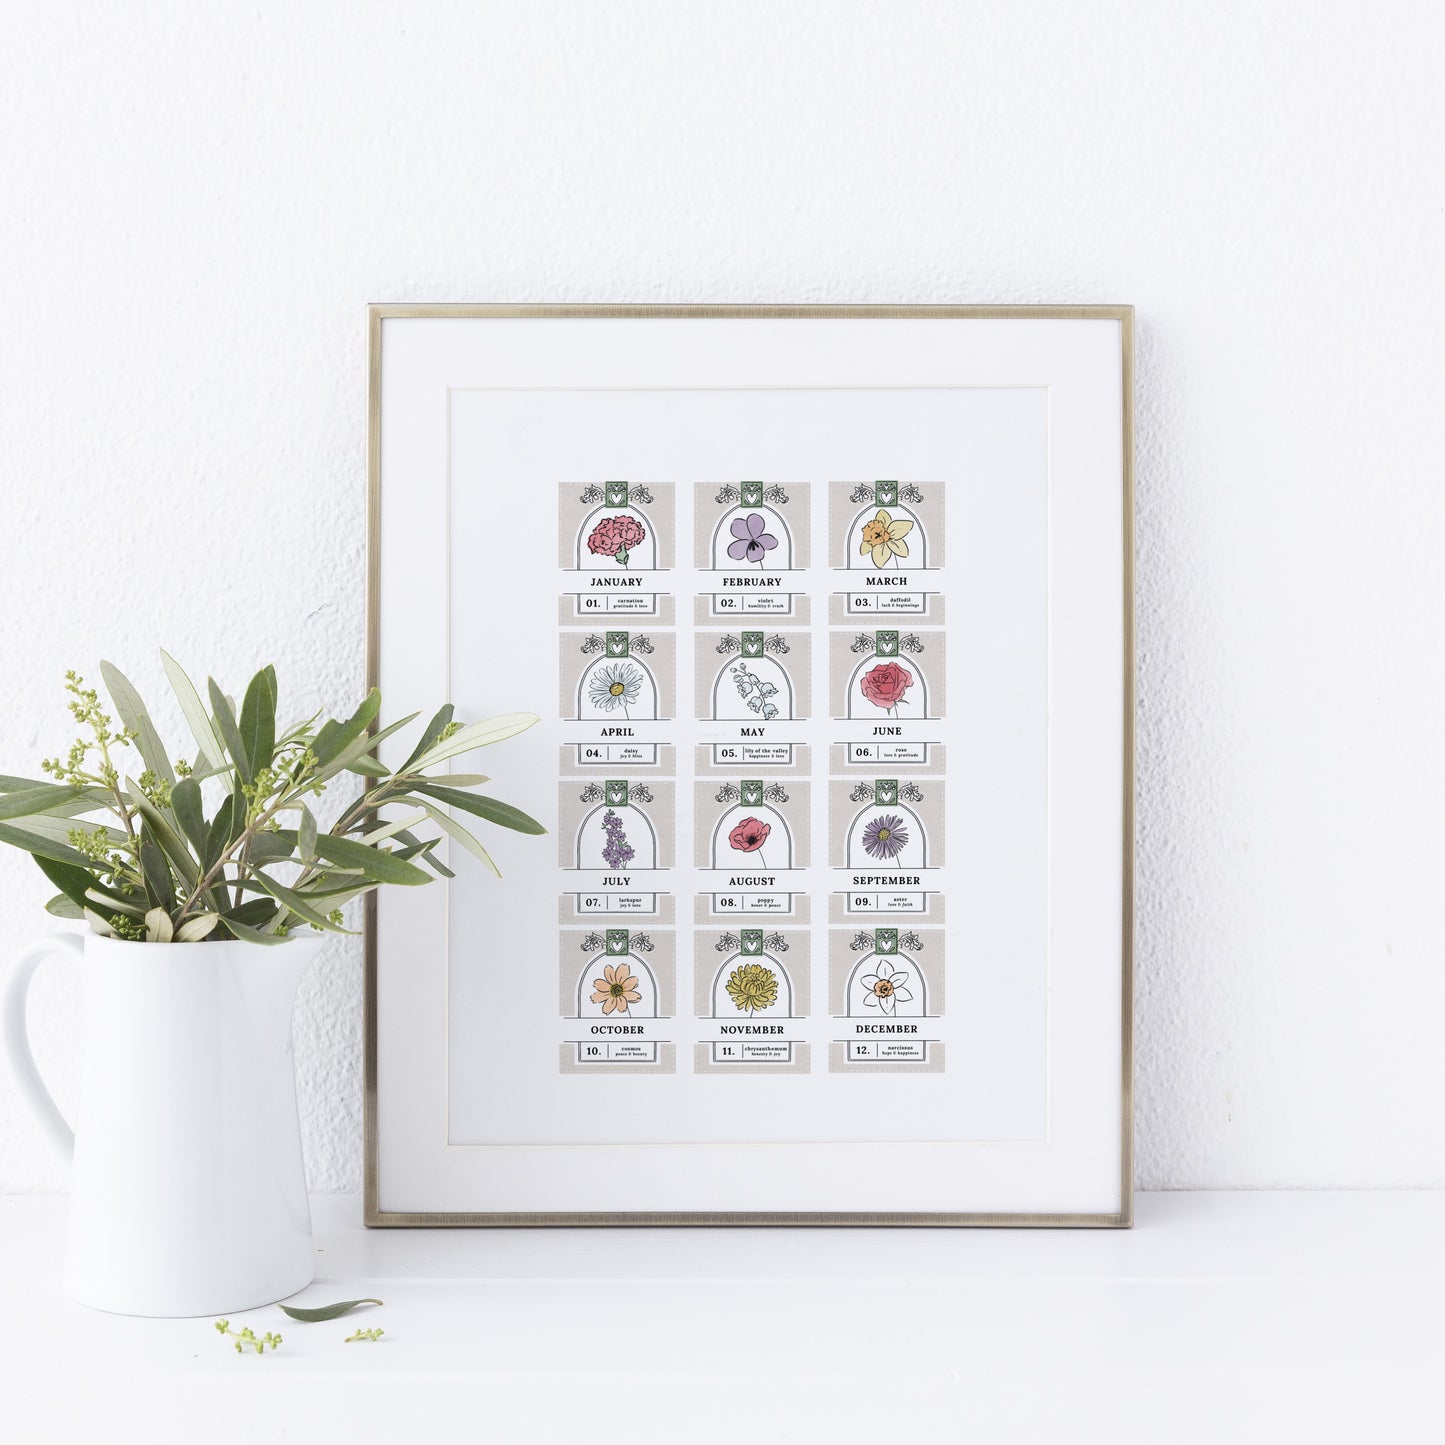 12 Birth Flower Garden Seed Printable | Full Year Birth Flower Chart | Garden Inspired Wall Decor